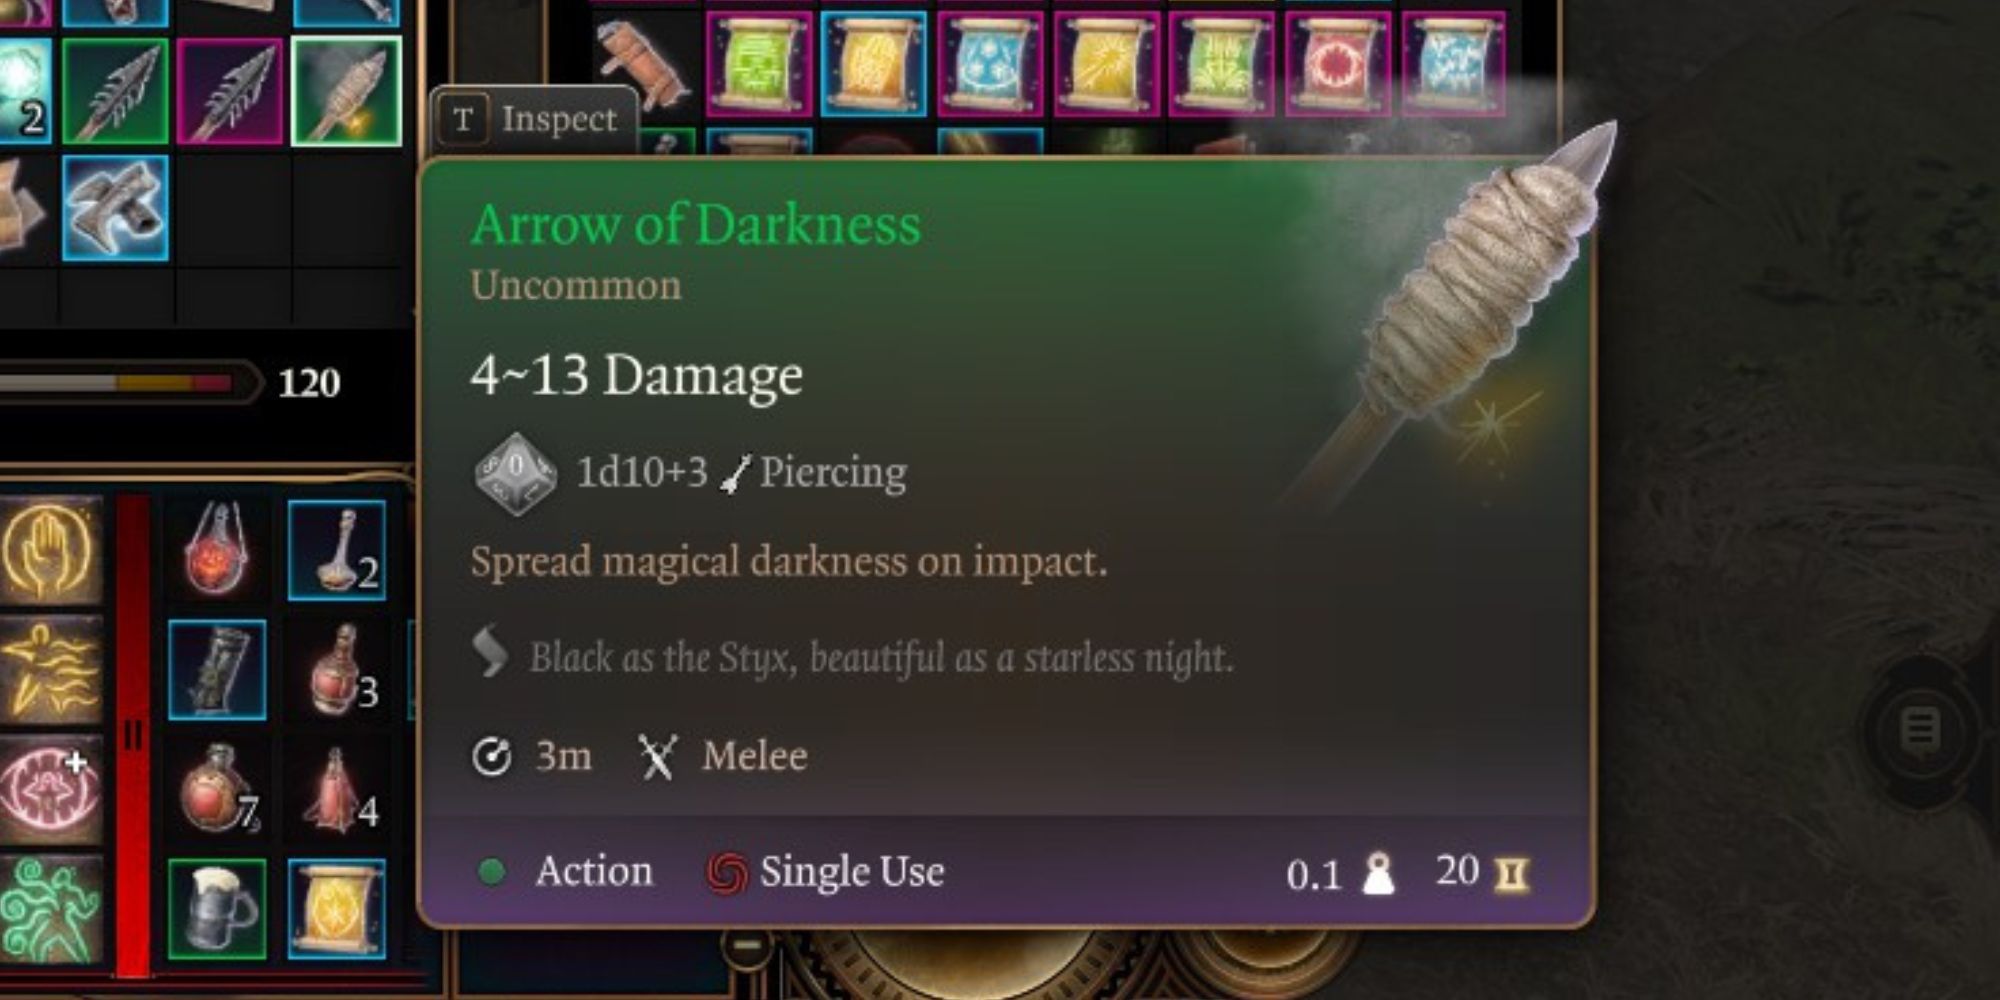 A Arrow of Darkness in Baldur's Gate 3